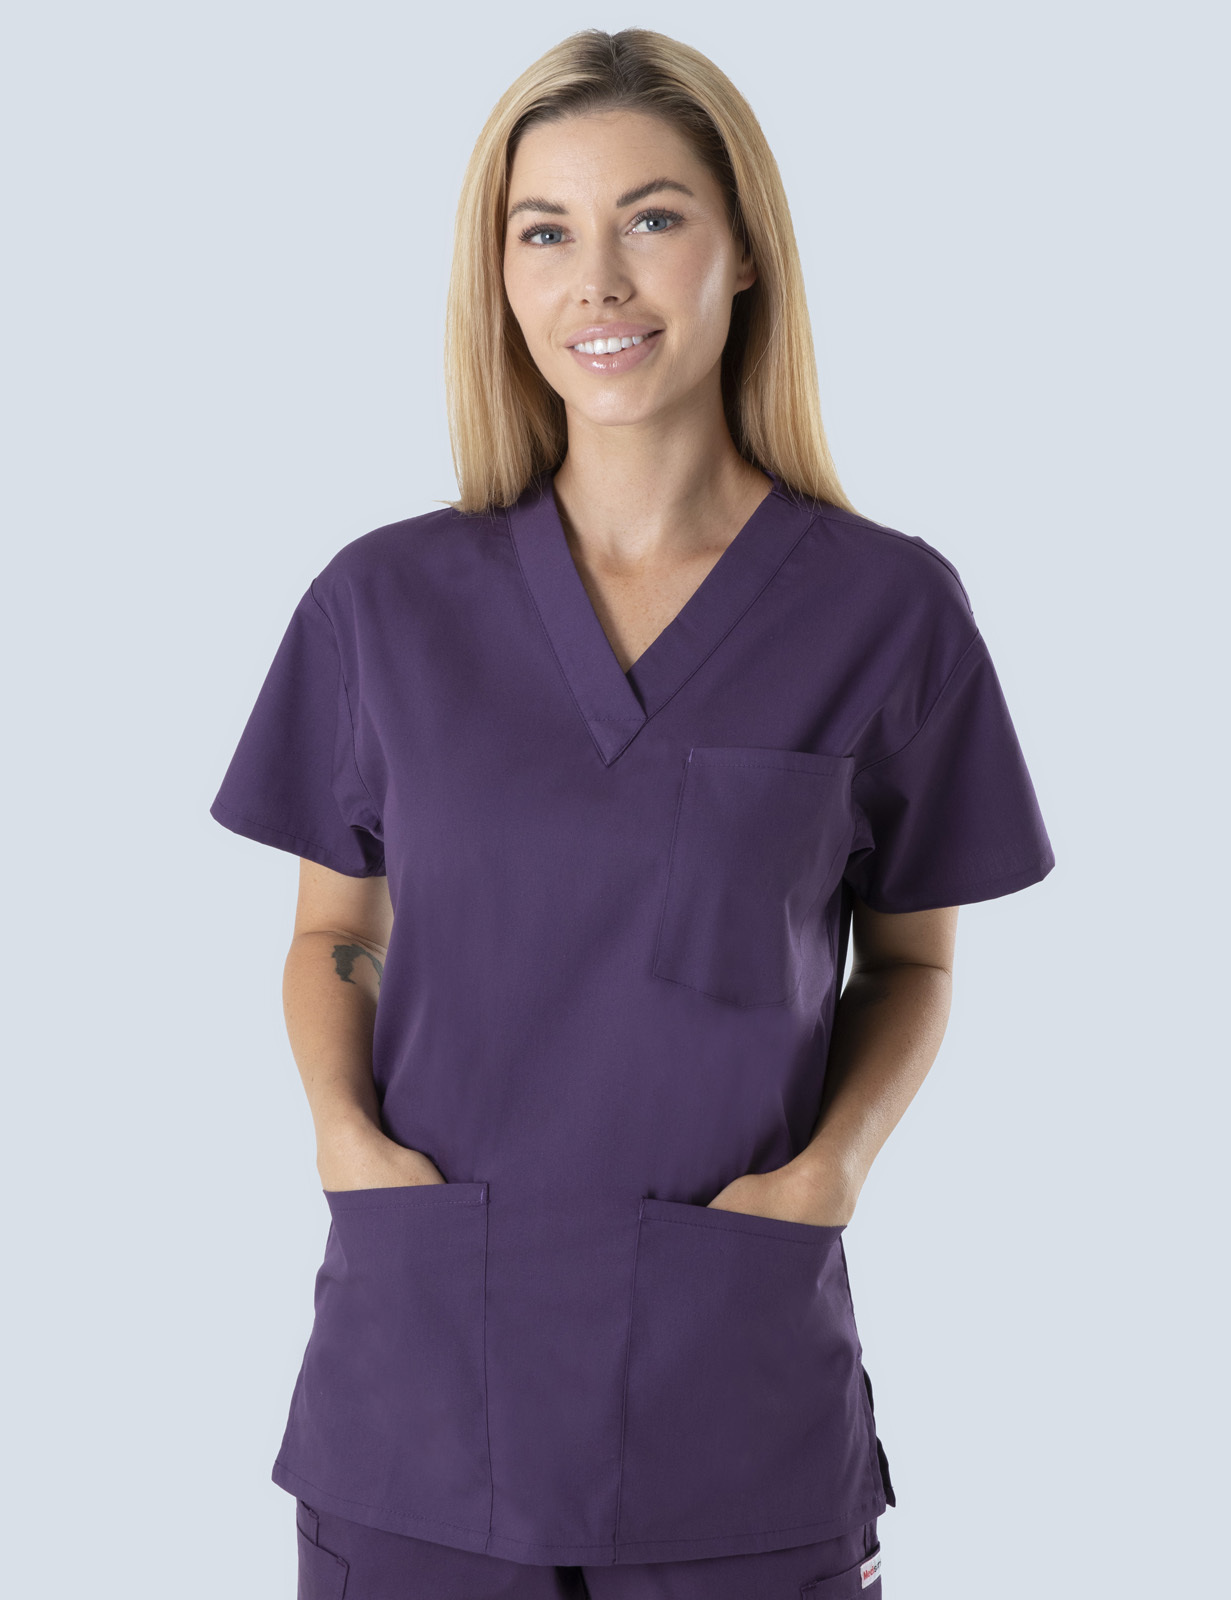 Queensland Children's Hospital Emergency Department Assistant in Nursing  Uniform Top Bundle  (4 Pocket Top in Aubergine incl Logos)